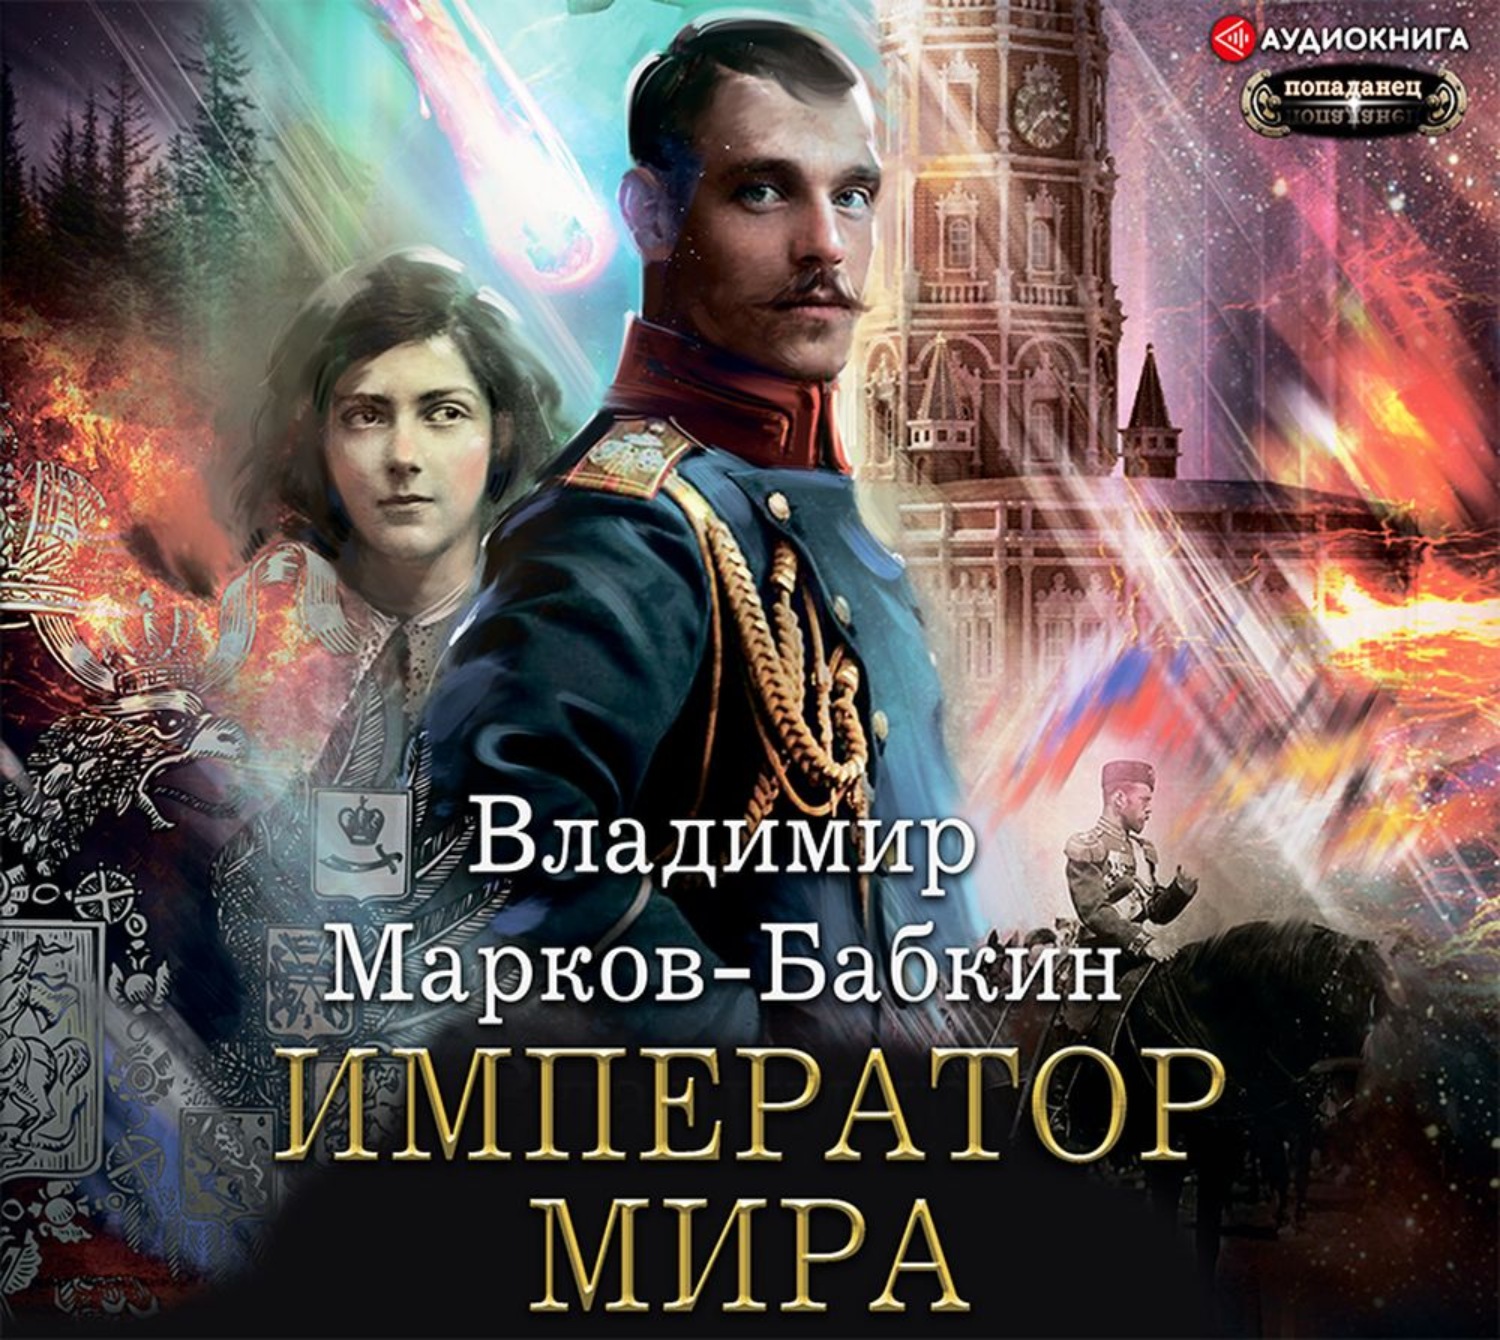 Книга про императора. Марков-Бабкин вперед Империя 1917.